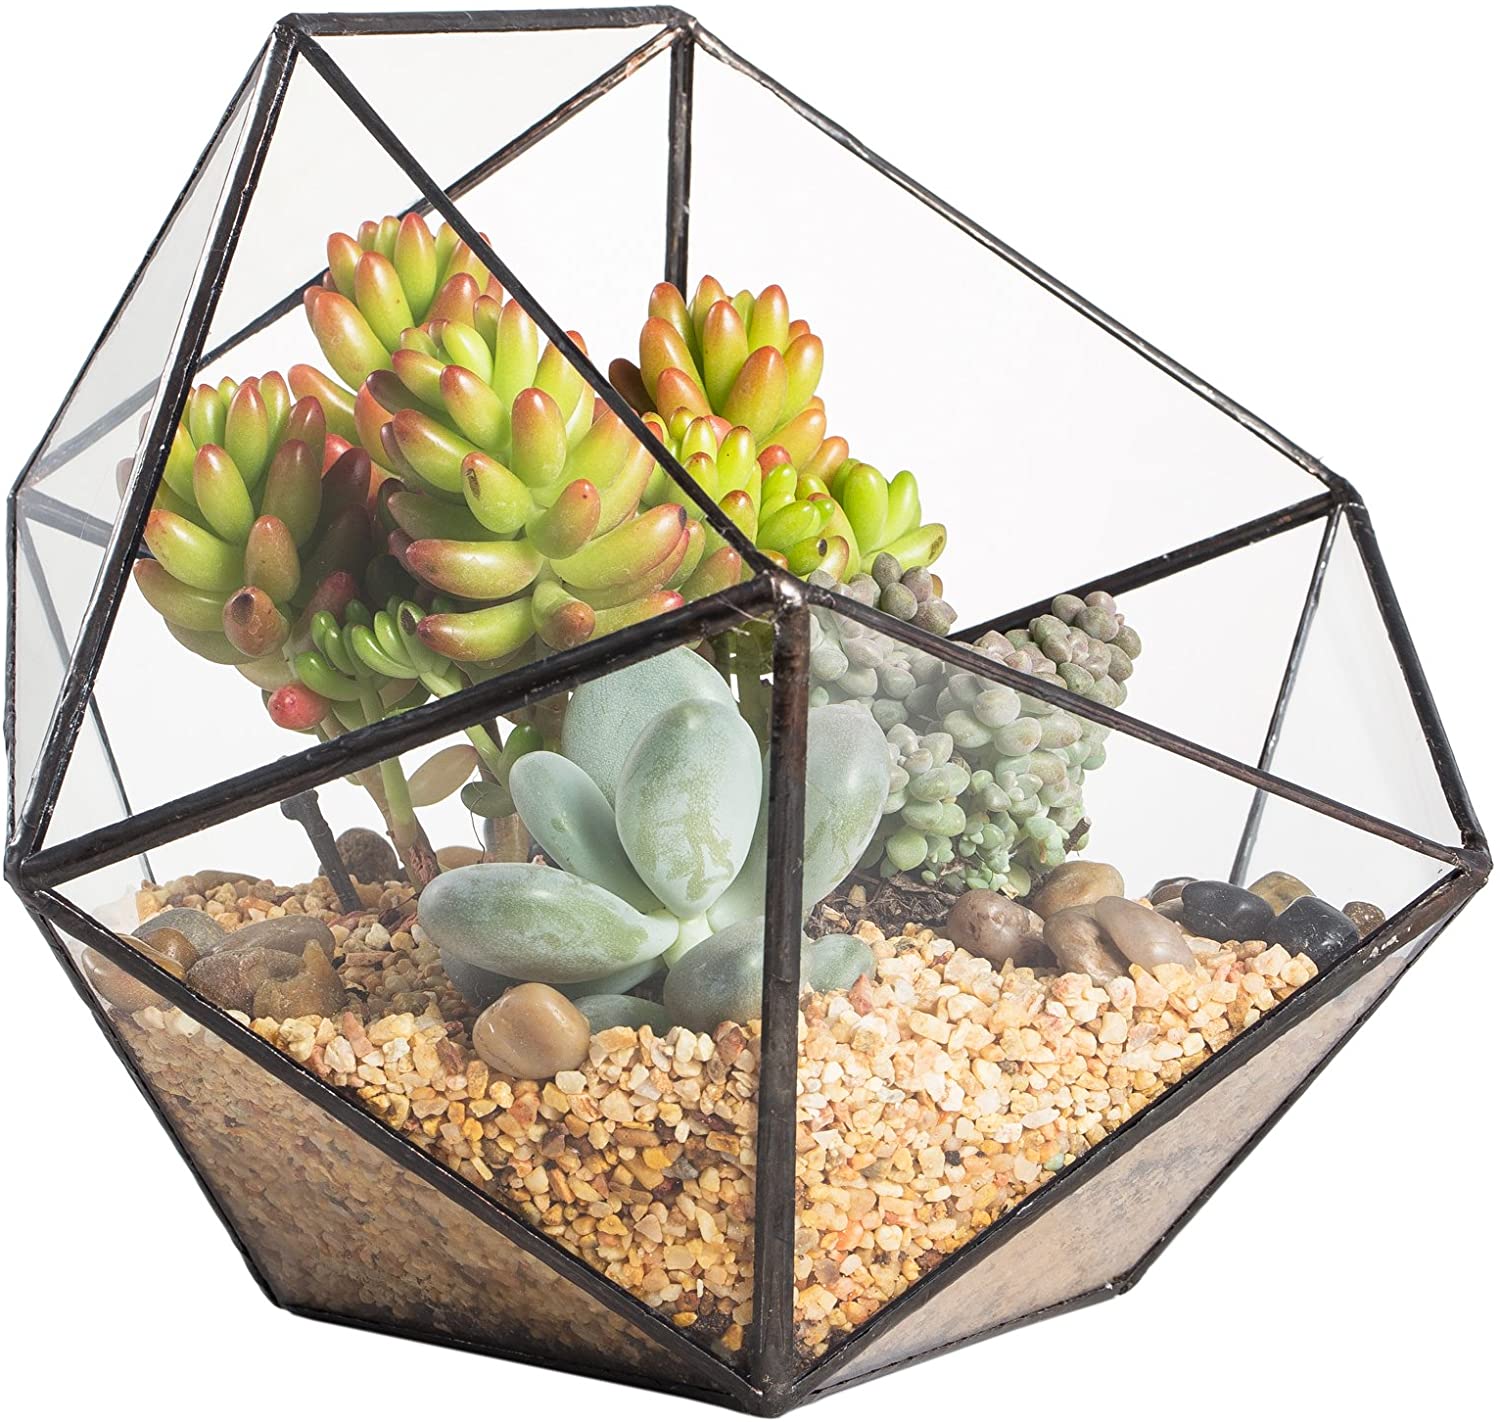 Handmade geometric terrarium – Best seller on Amazon